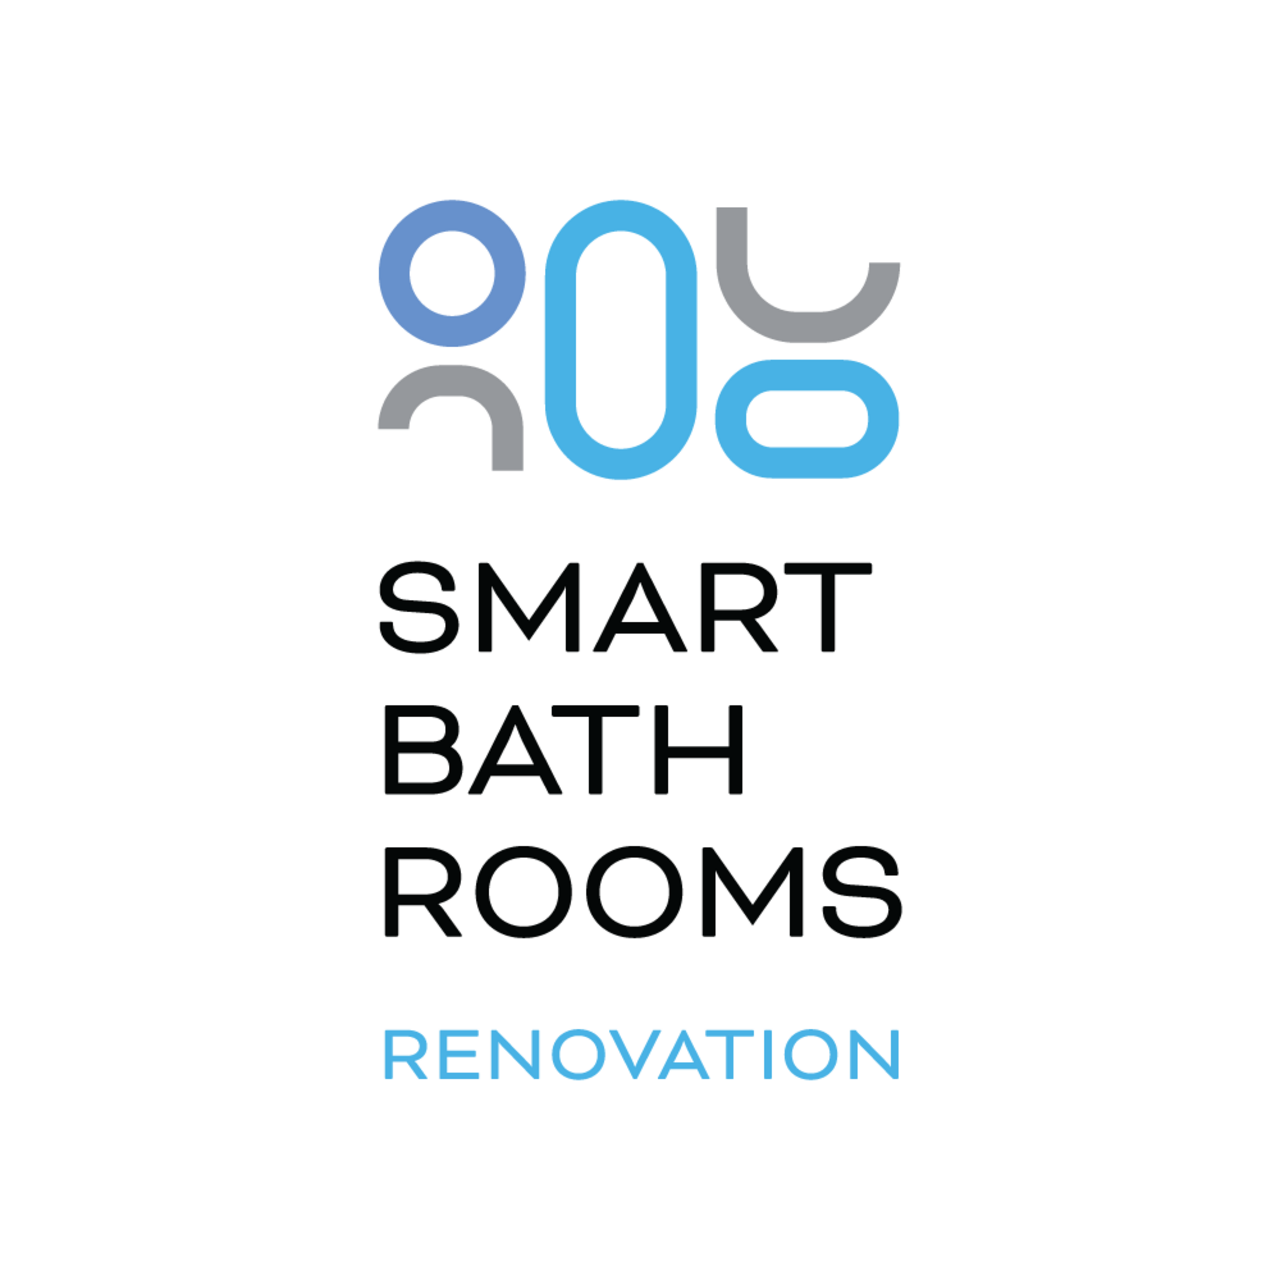 Smart Bathroom Renovations's logo